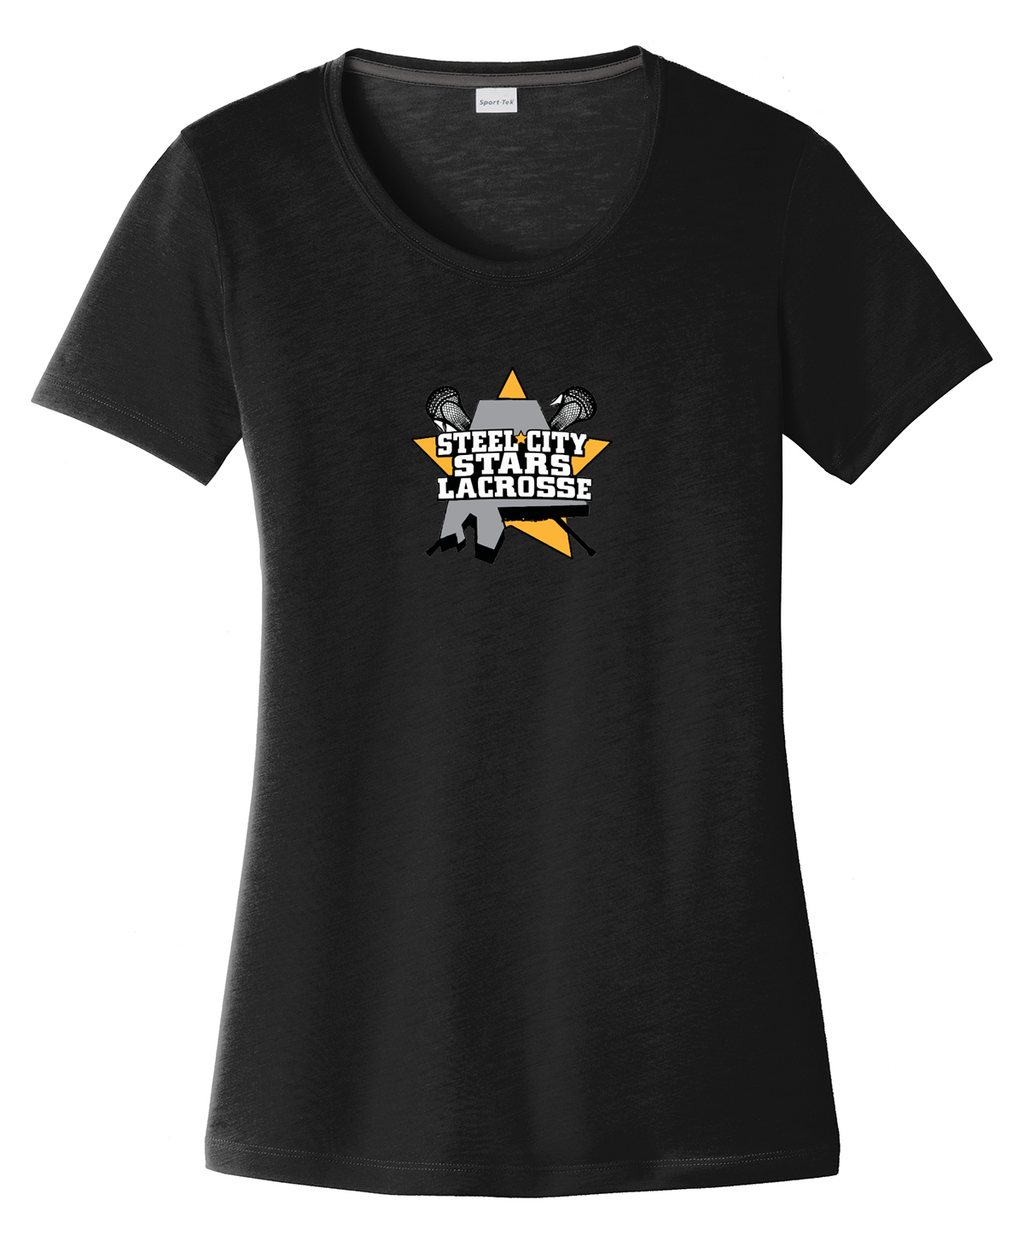 Stars Lacrosse Women's CottonTouch Performance T-Shirt